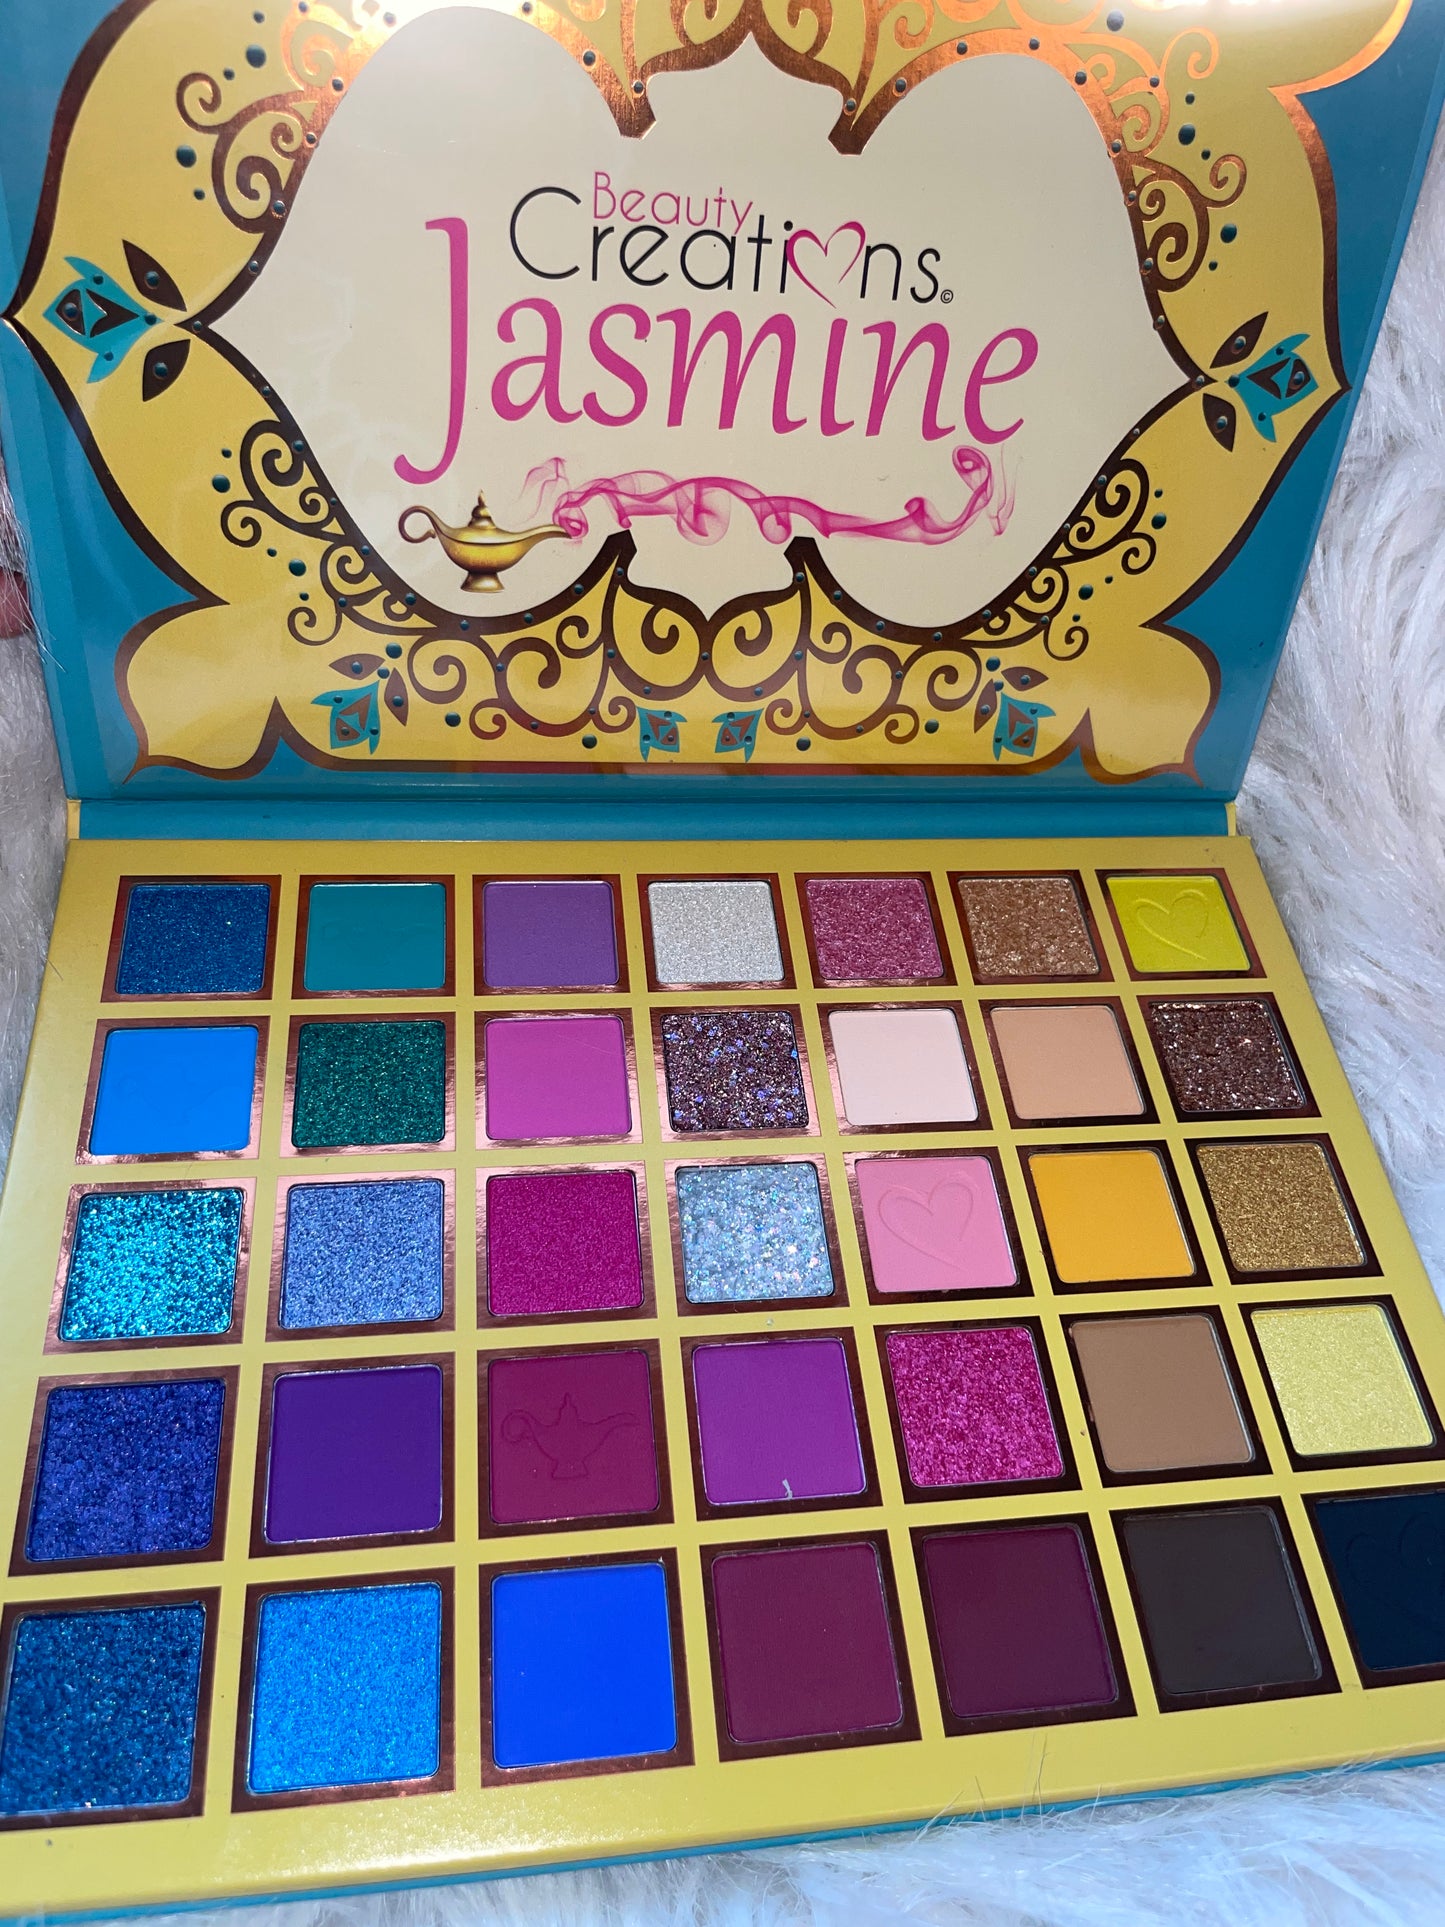 Beauty creation jasmine